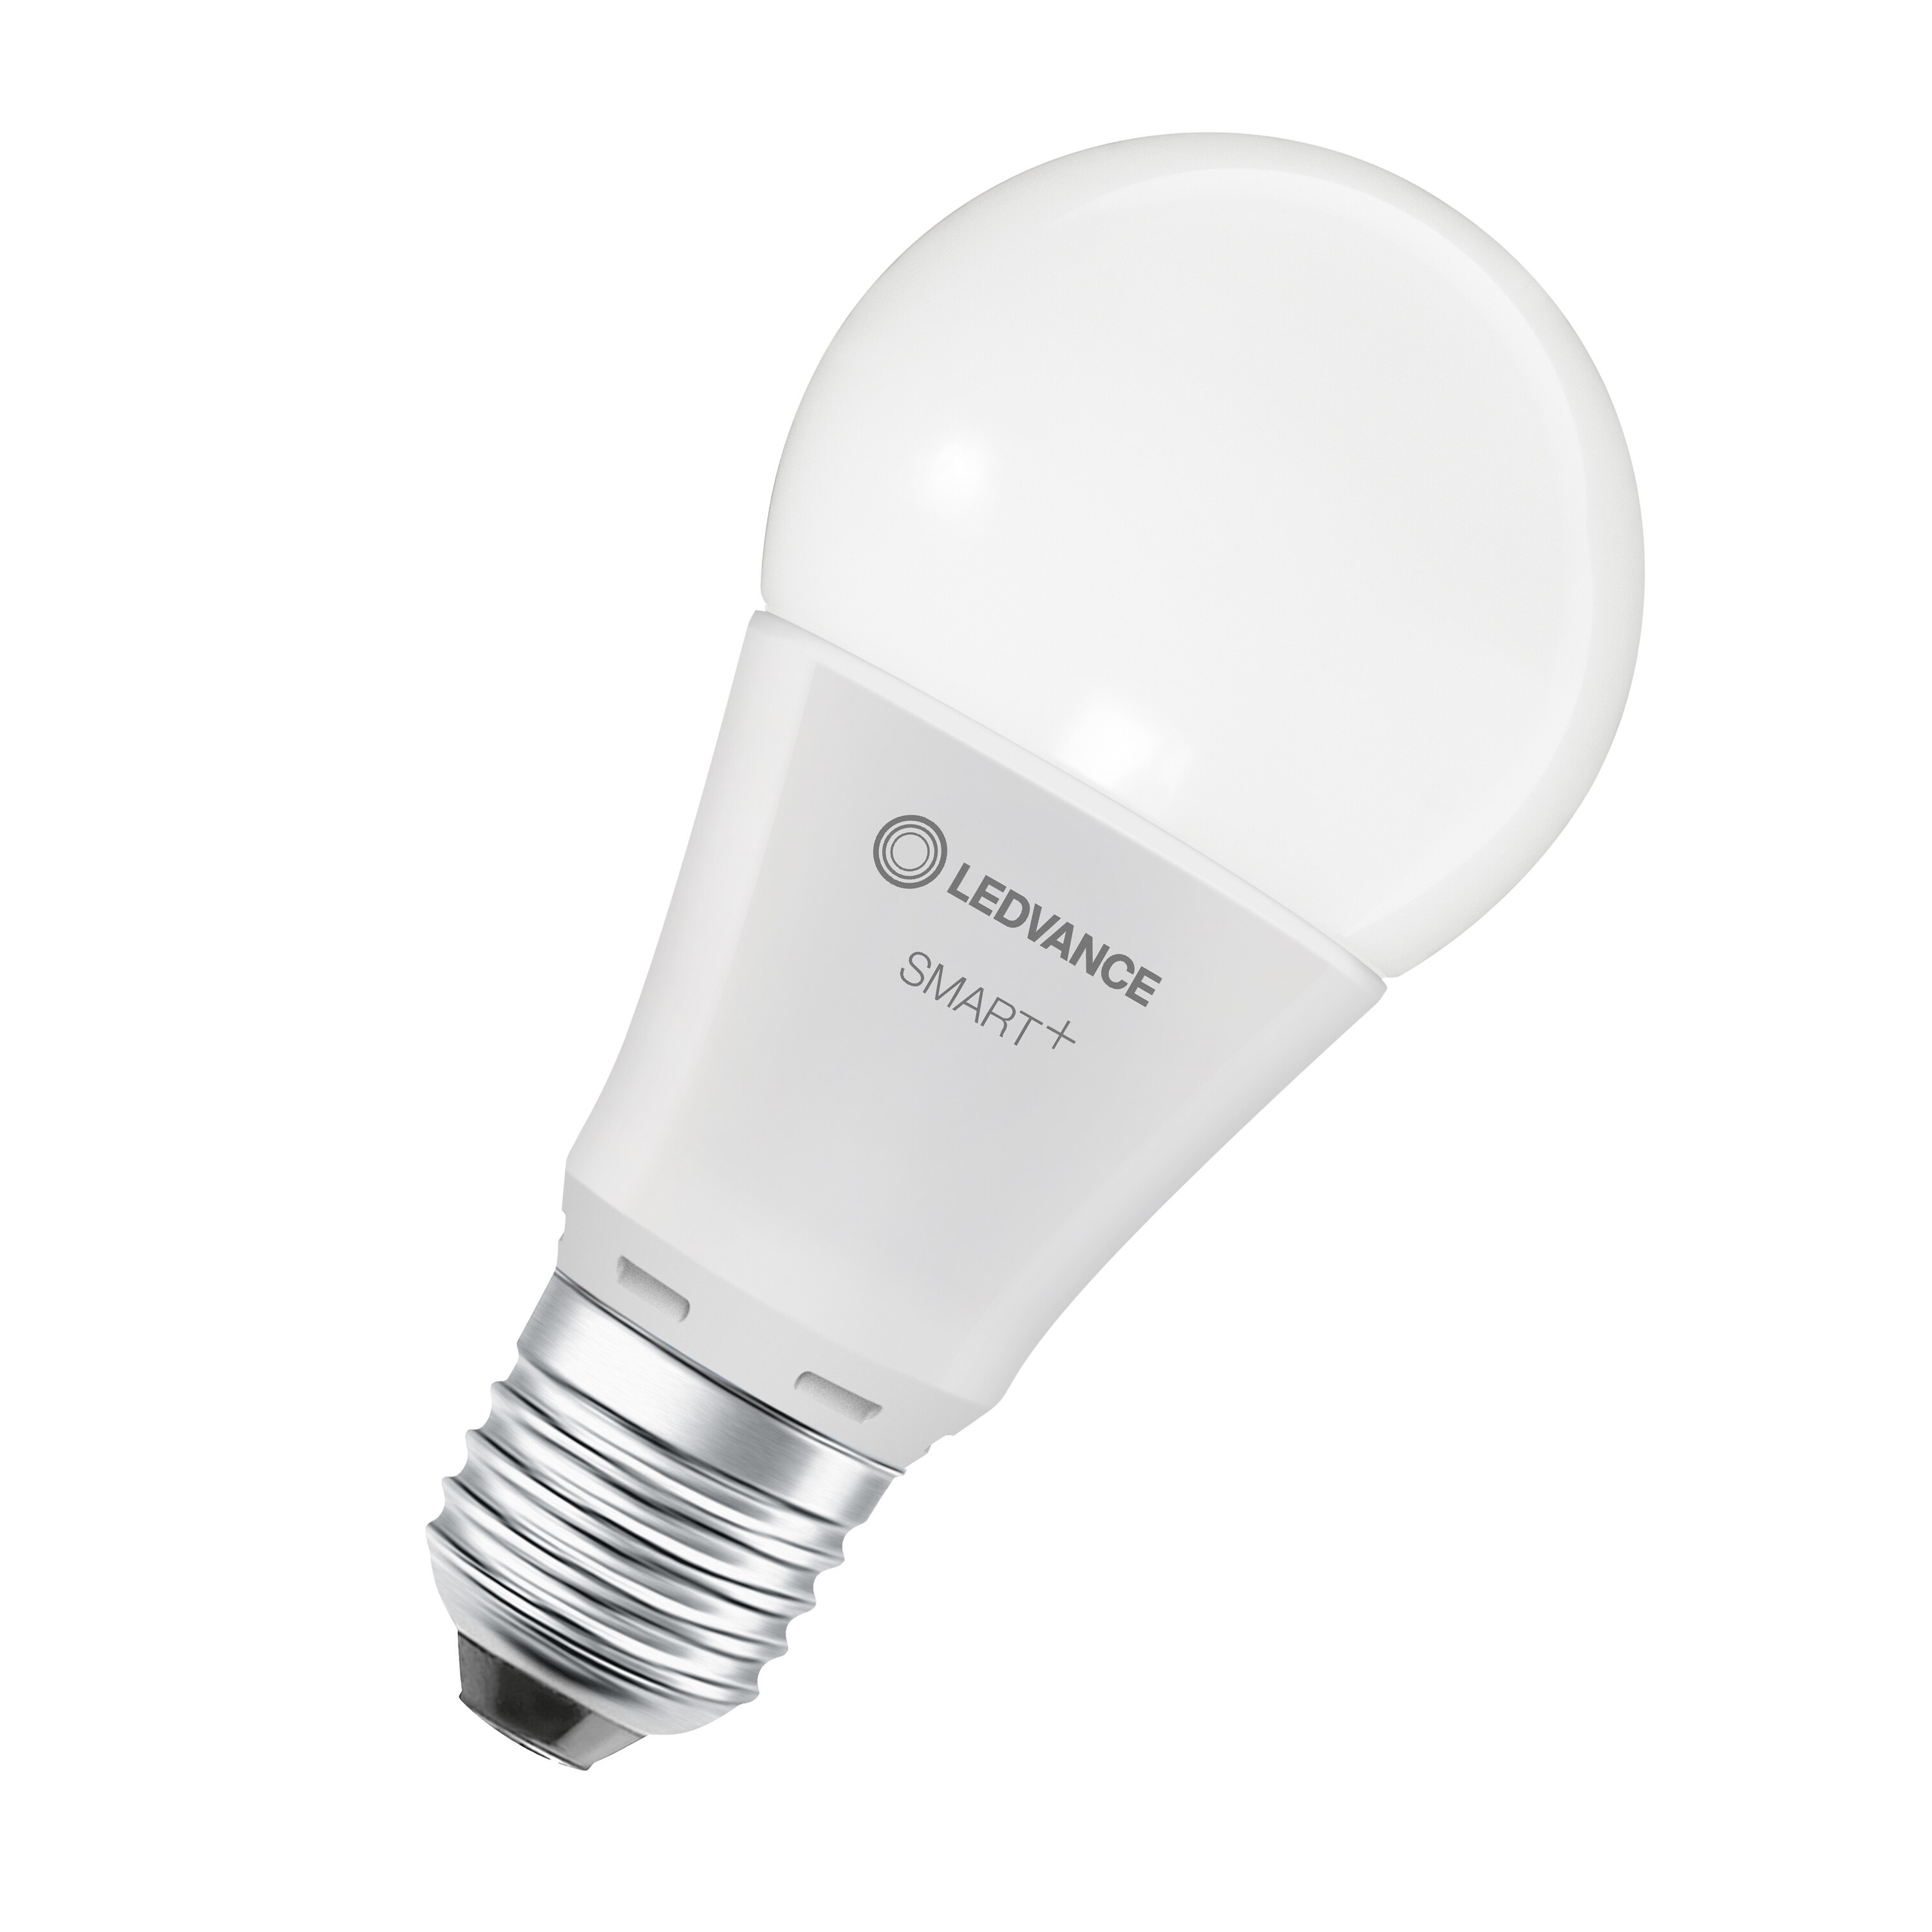 LEDVANCE SMART+ WiFi Classic Warmweiß Dimmable LED Lampe